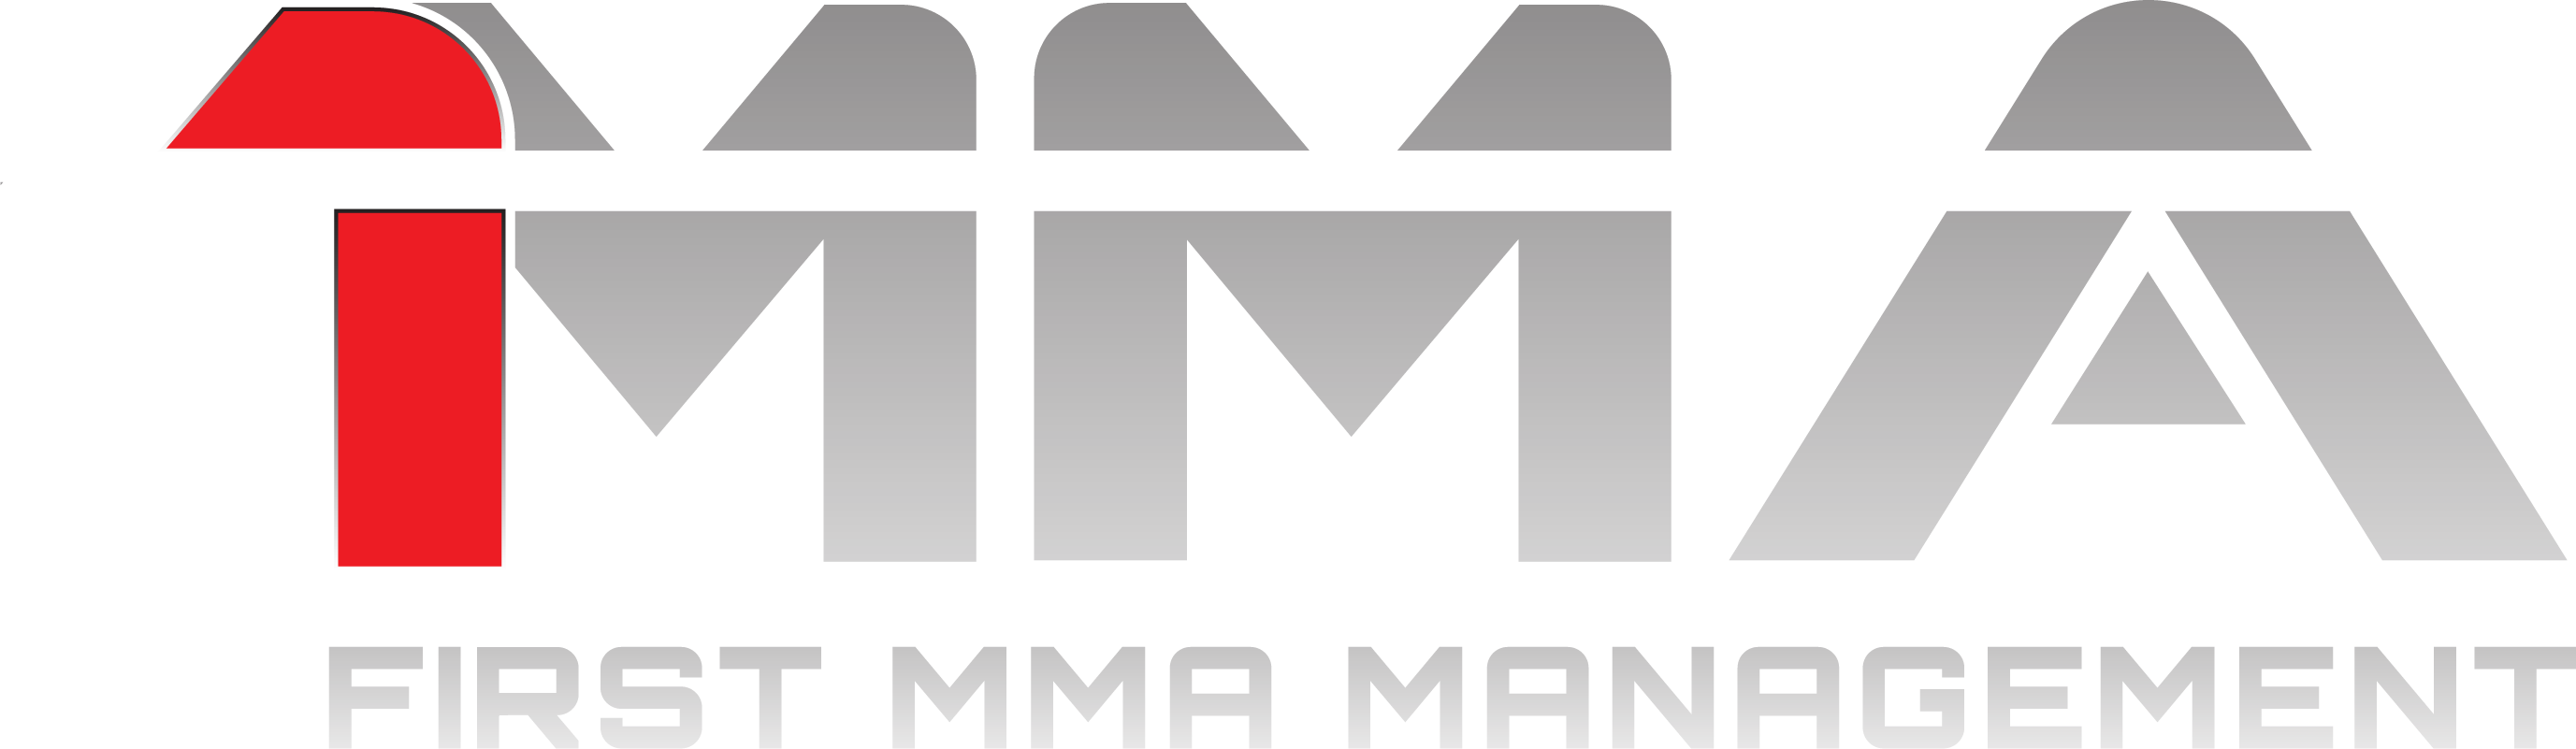 1MMA Management